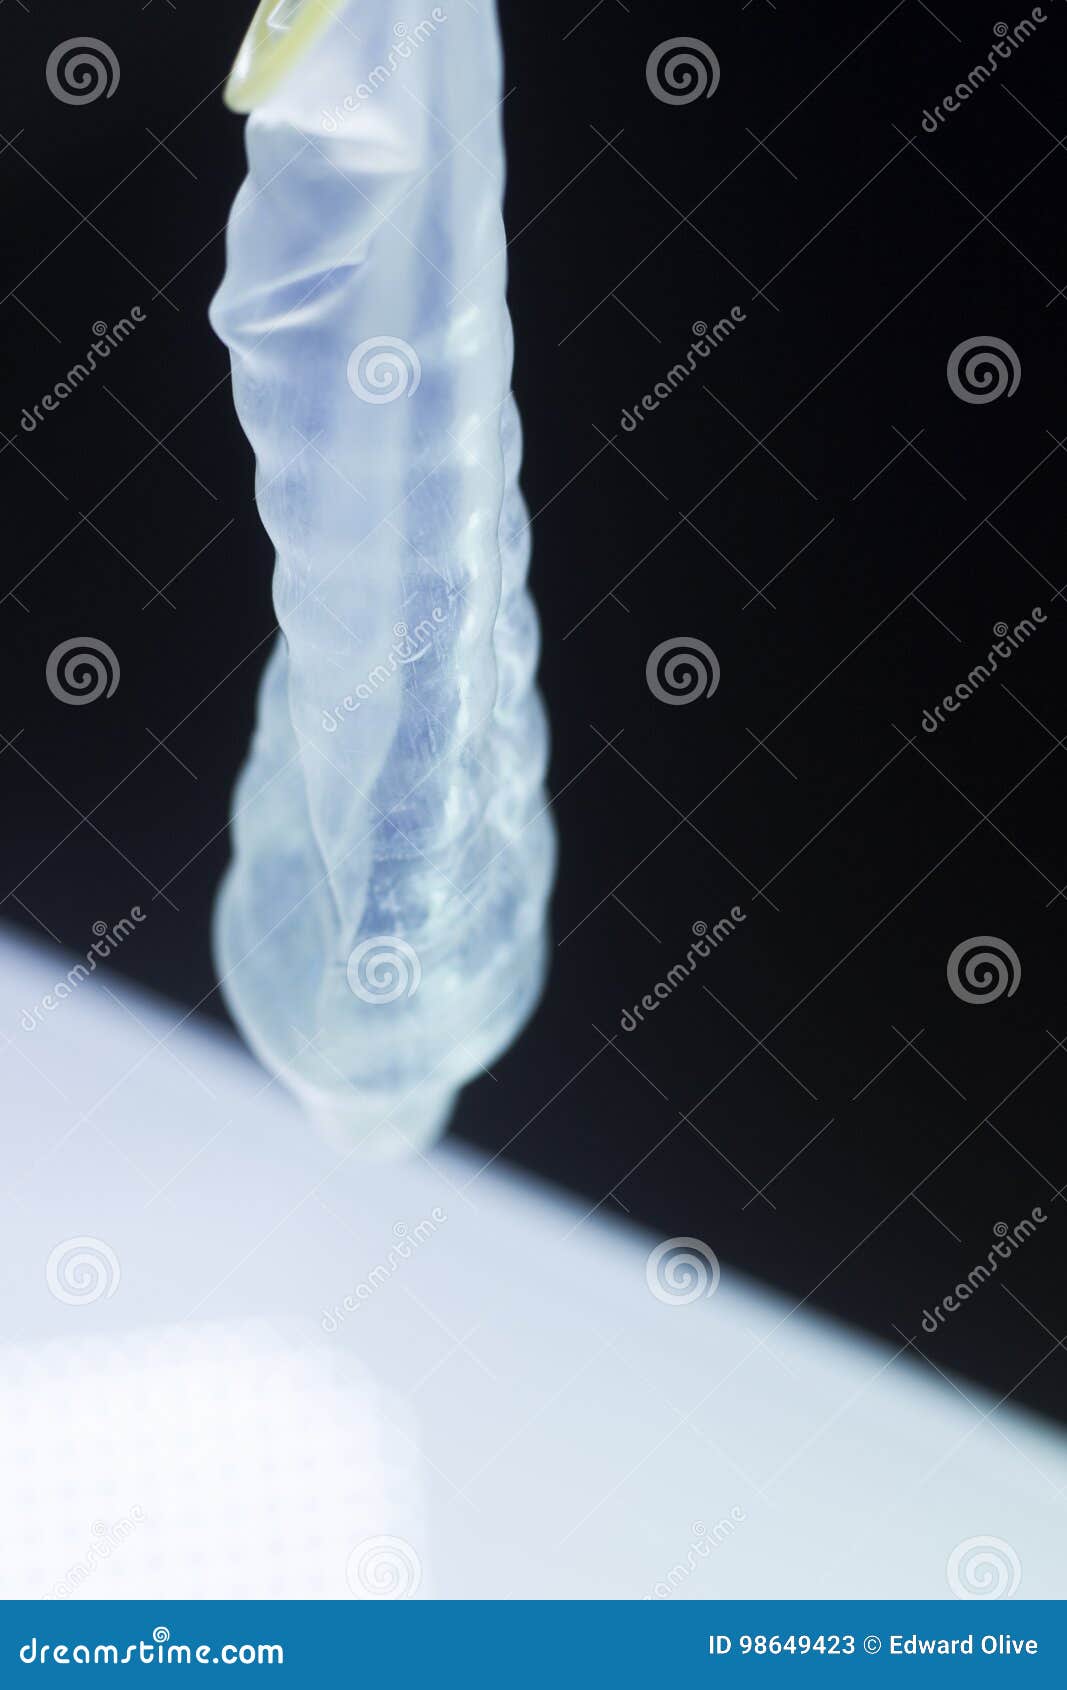 Rubber Condom Contraceptive Stock Image Image Of Disease Protect